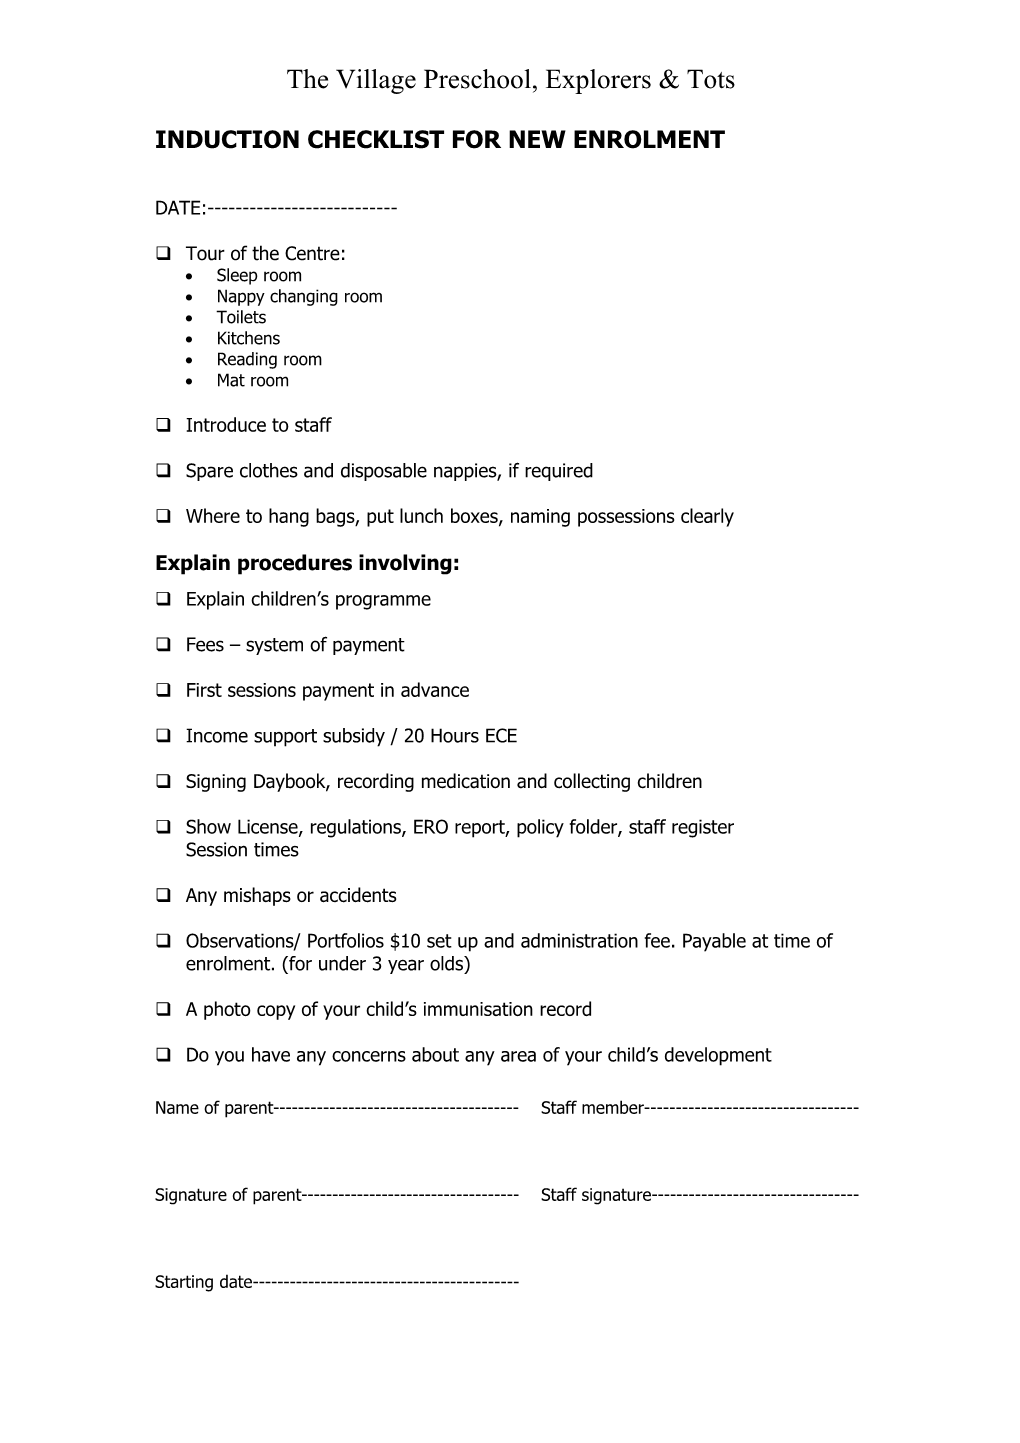 Induction Checklist for New Enrolment